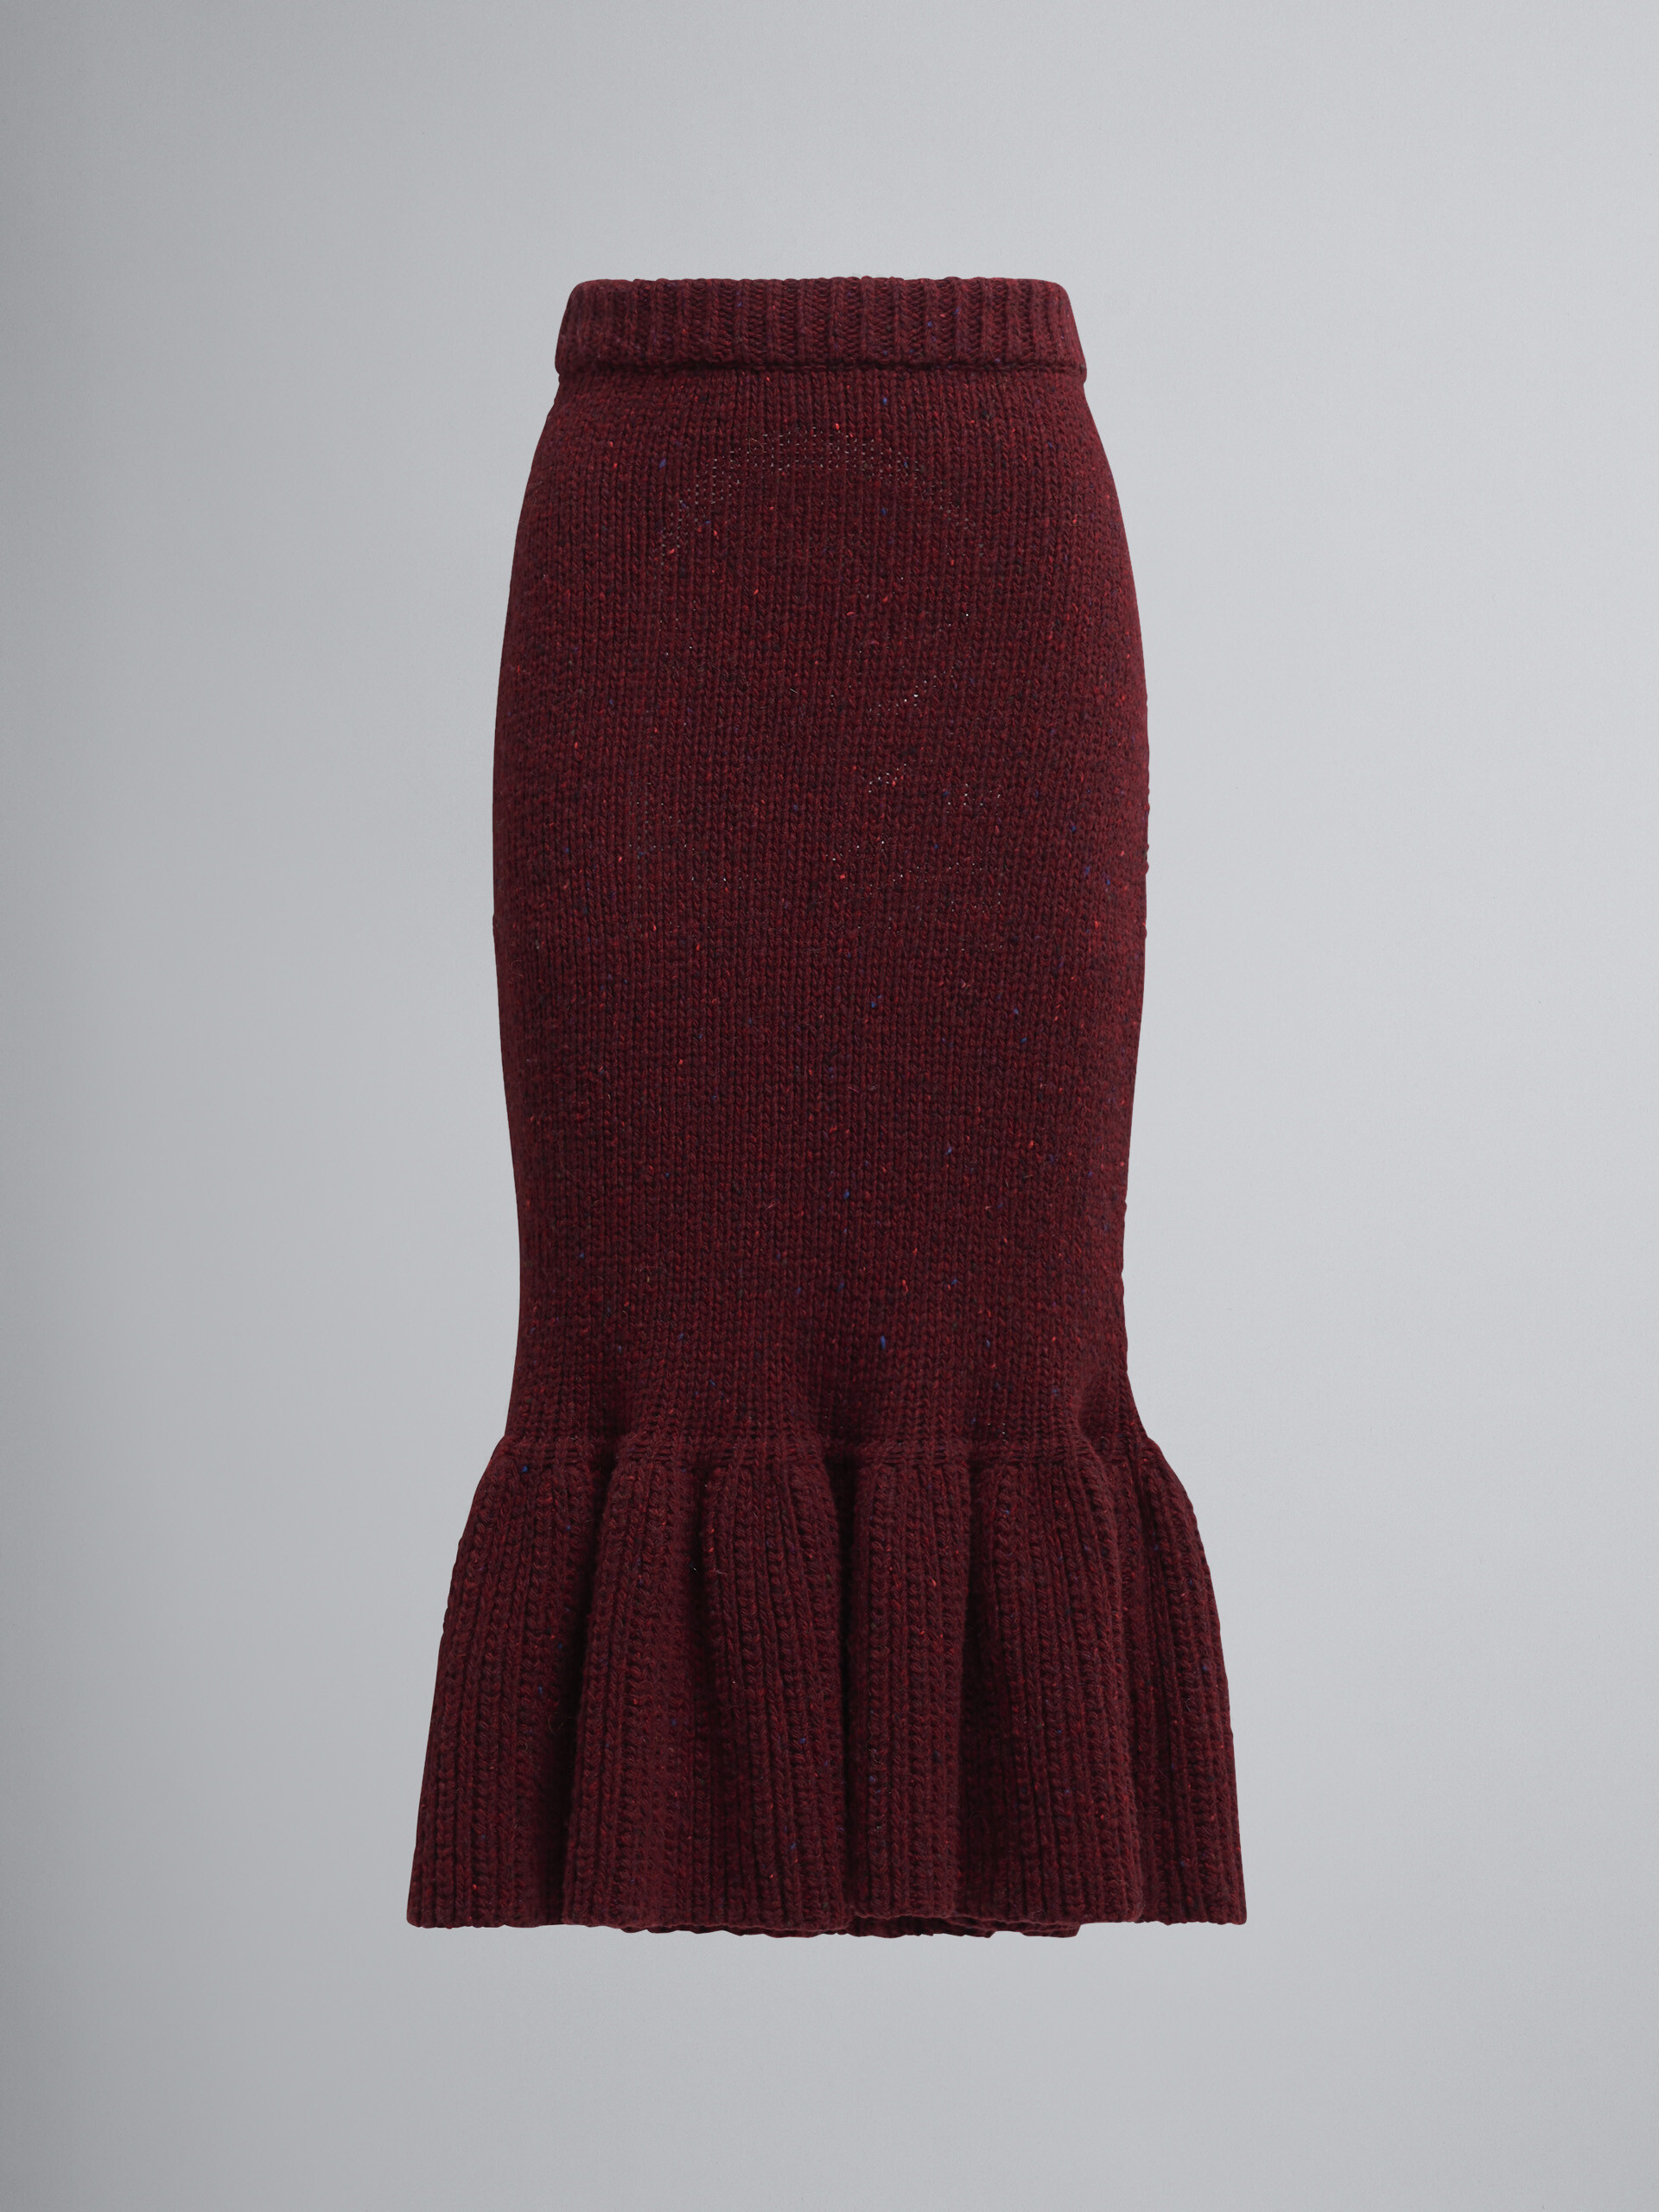 3D-stitch skirt in Shetland wool - Skirts - Image 1